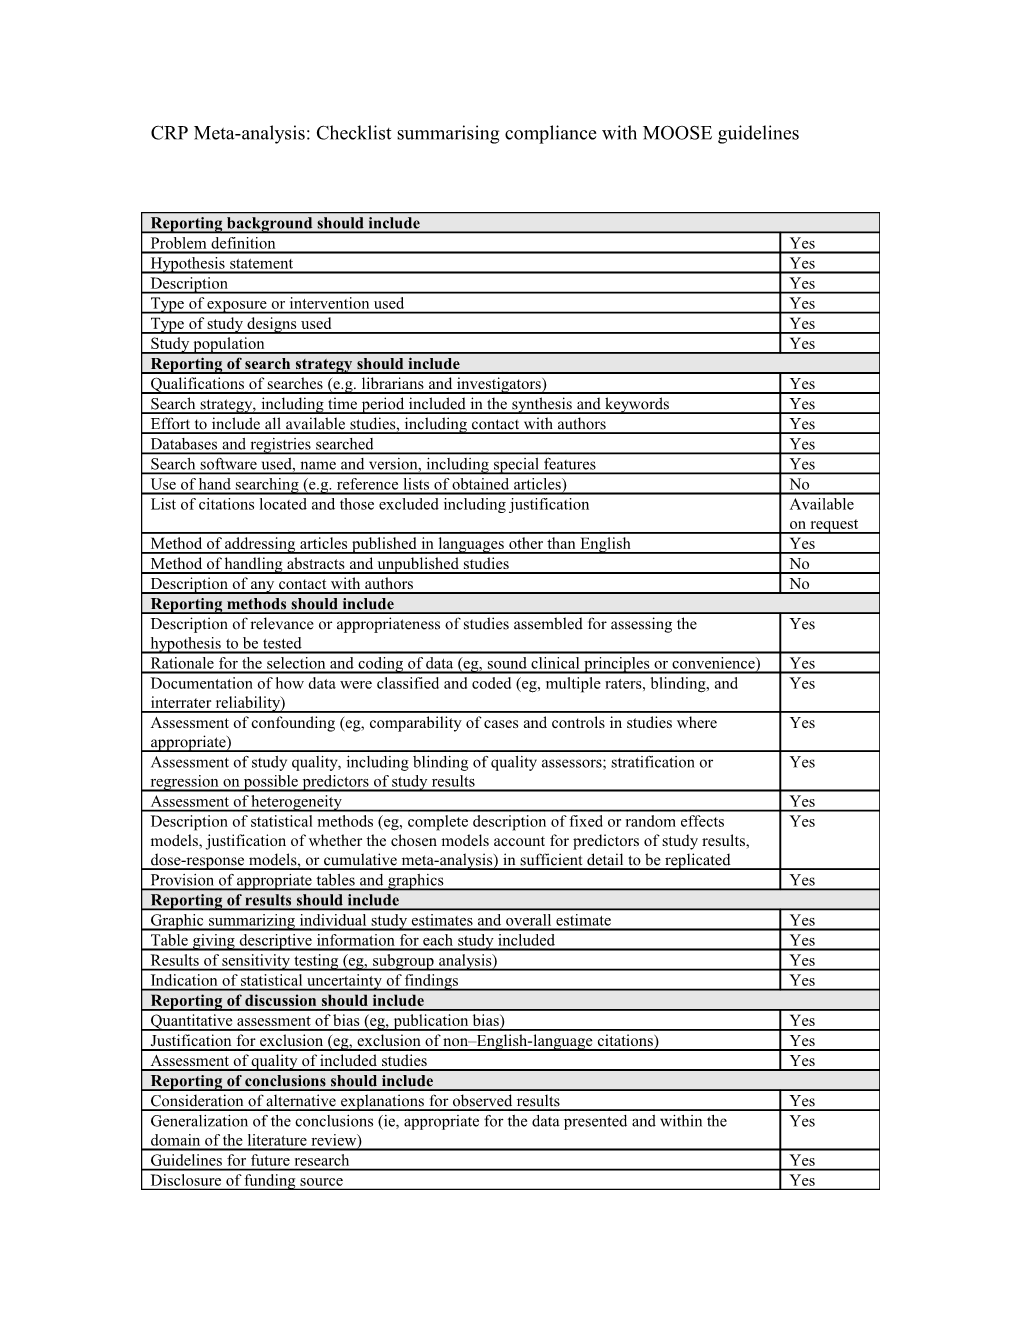 Checklist Summarising Compliance with MOOSE Guidelines